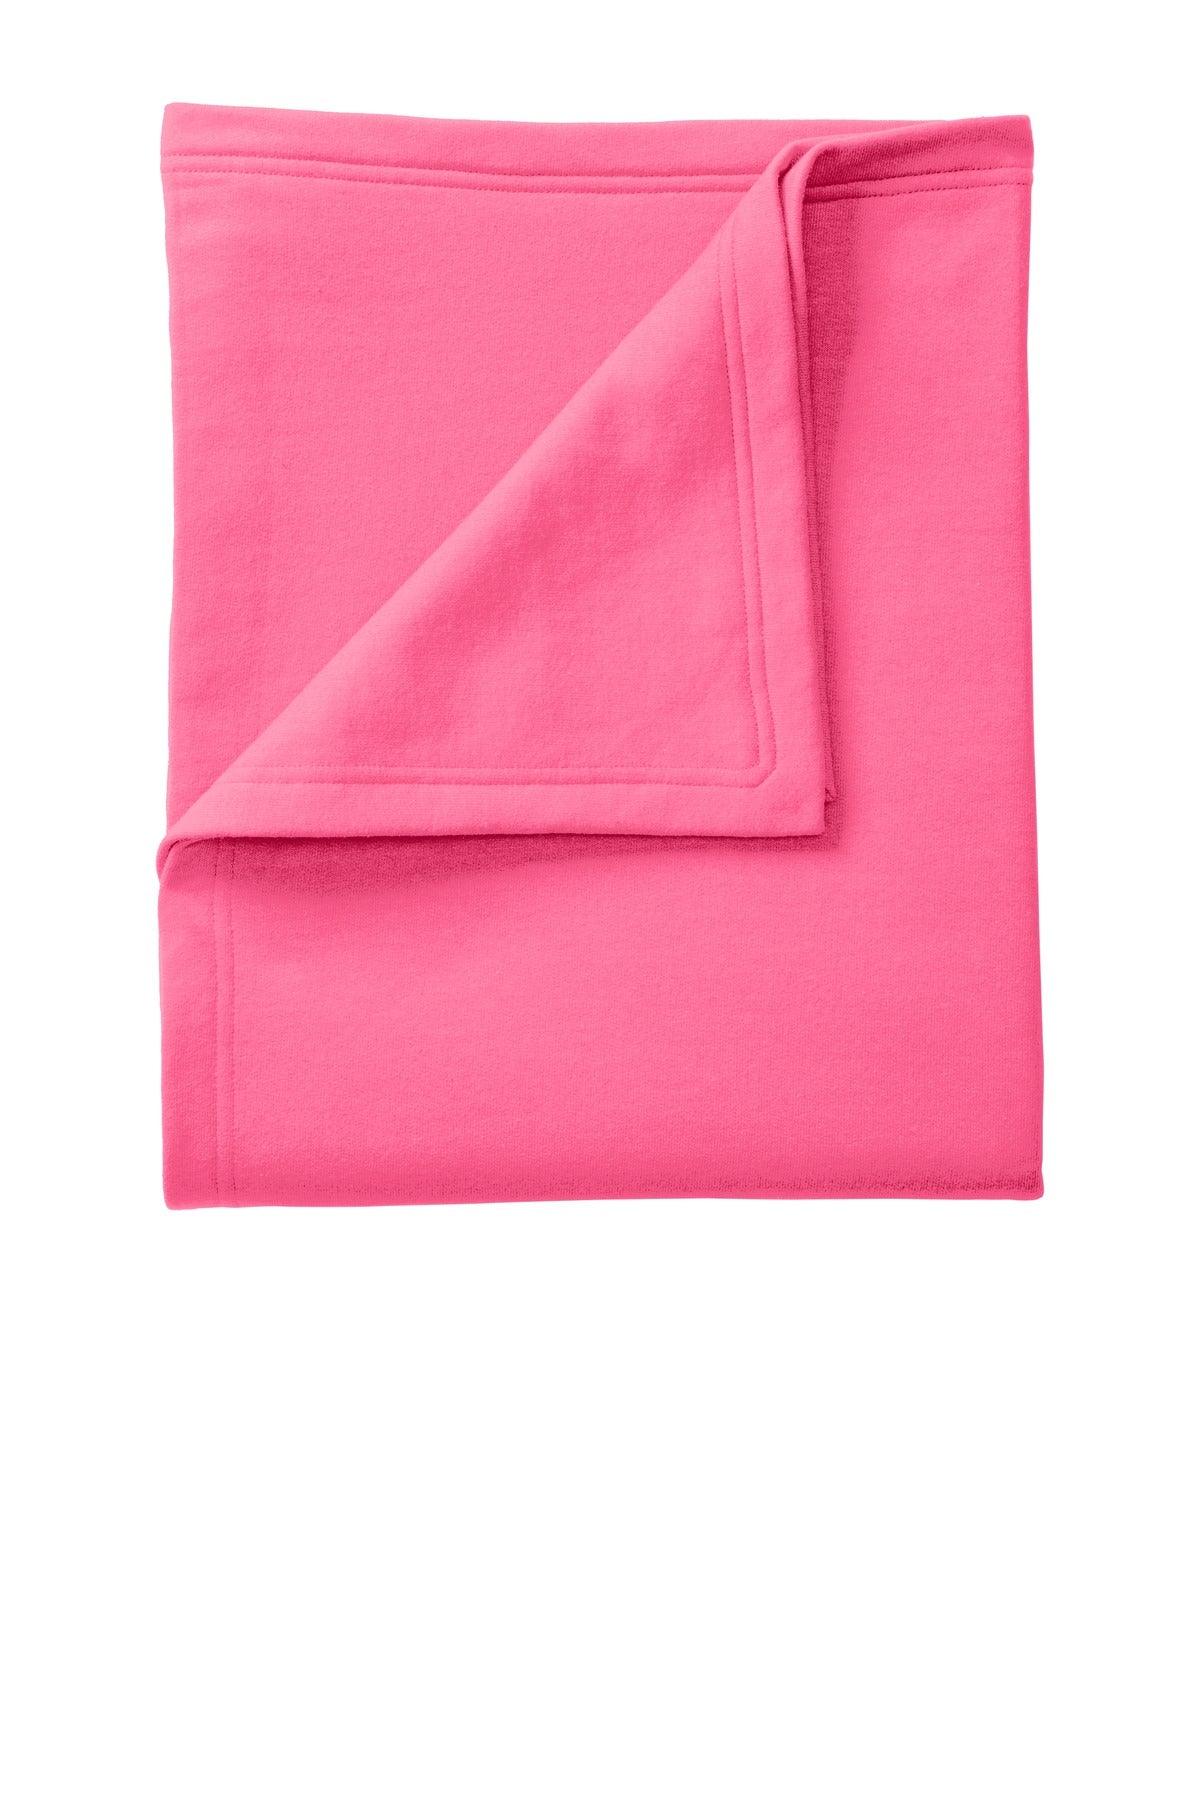 Port & Company Core Fleece Sweatshirt Blanket. BP78 - Dresses Max